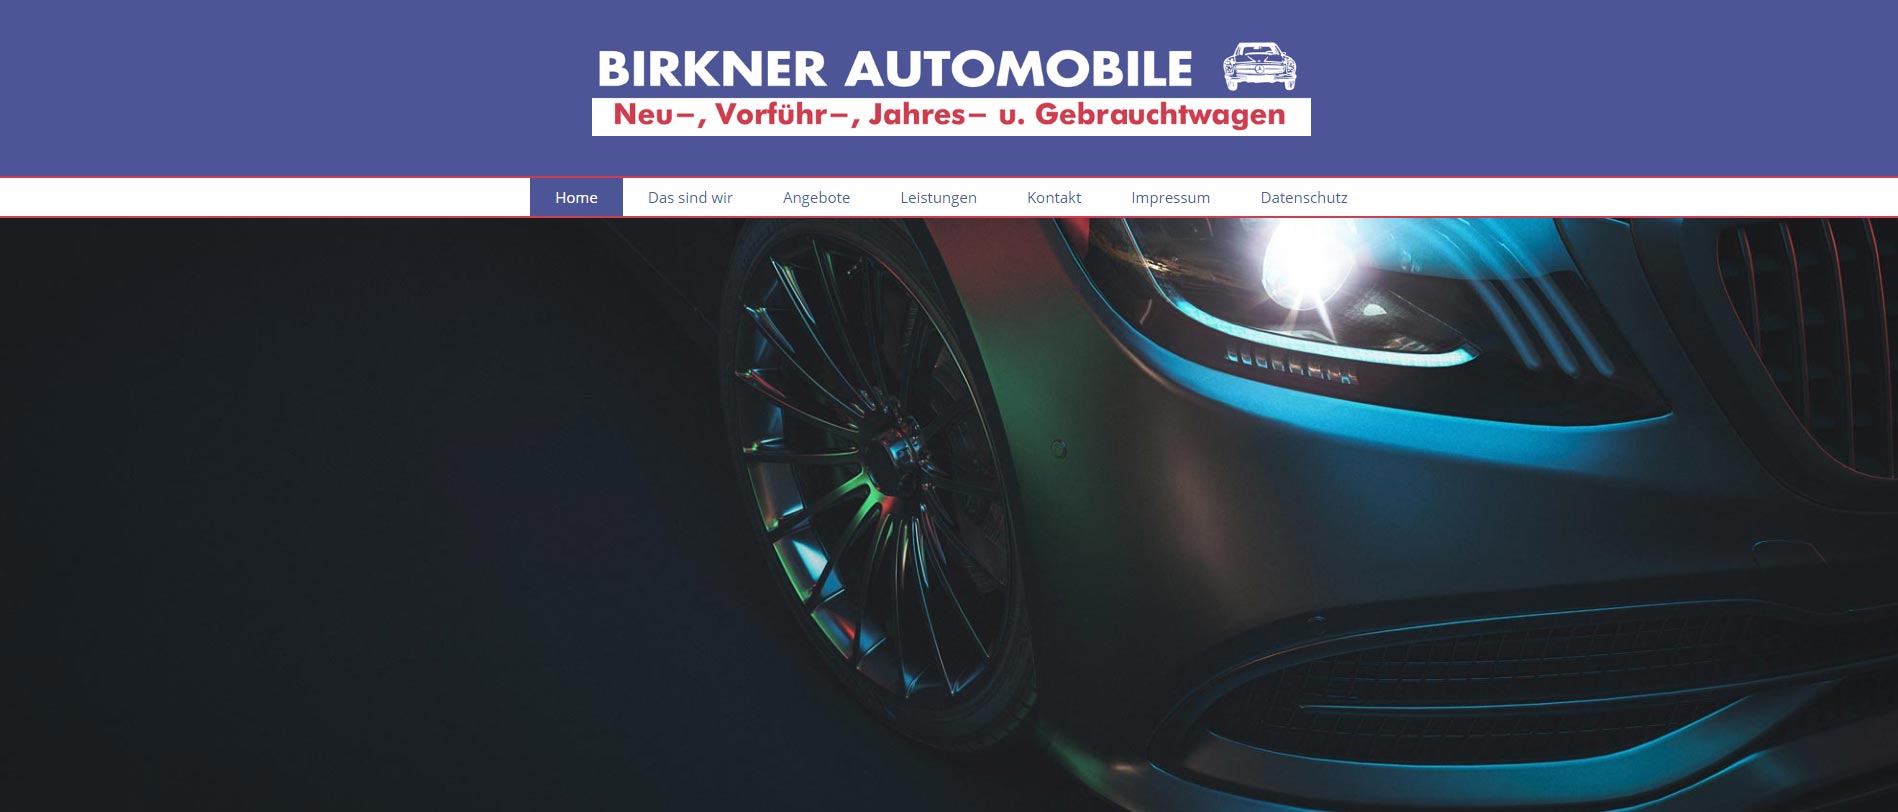 (c) Birkner-automobile.de